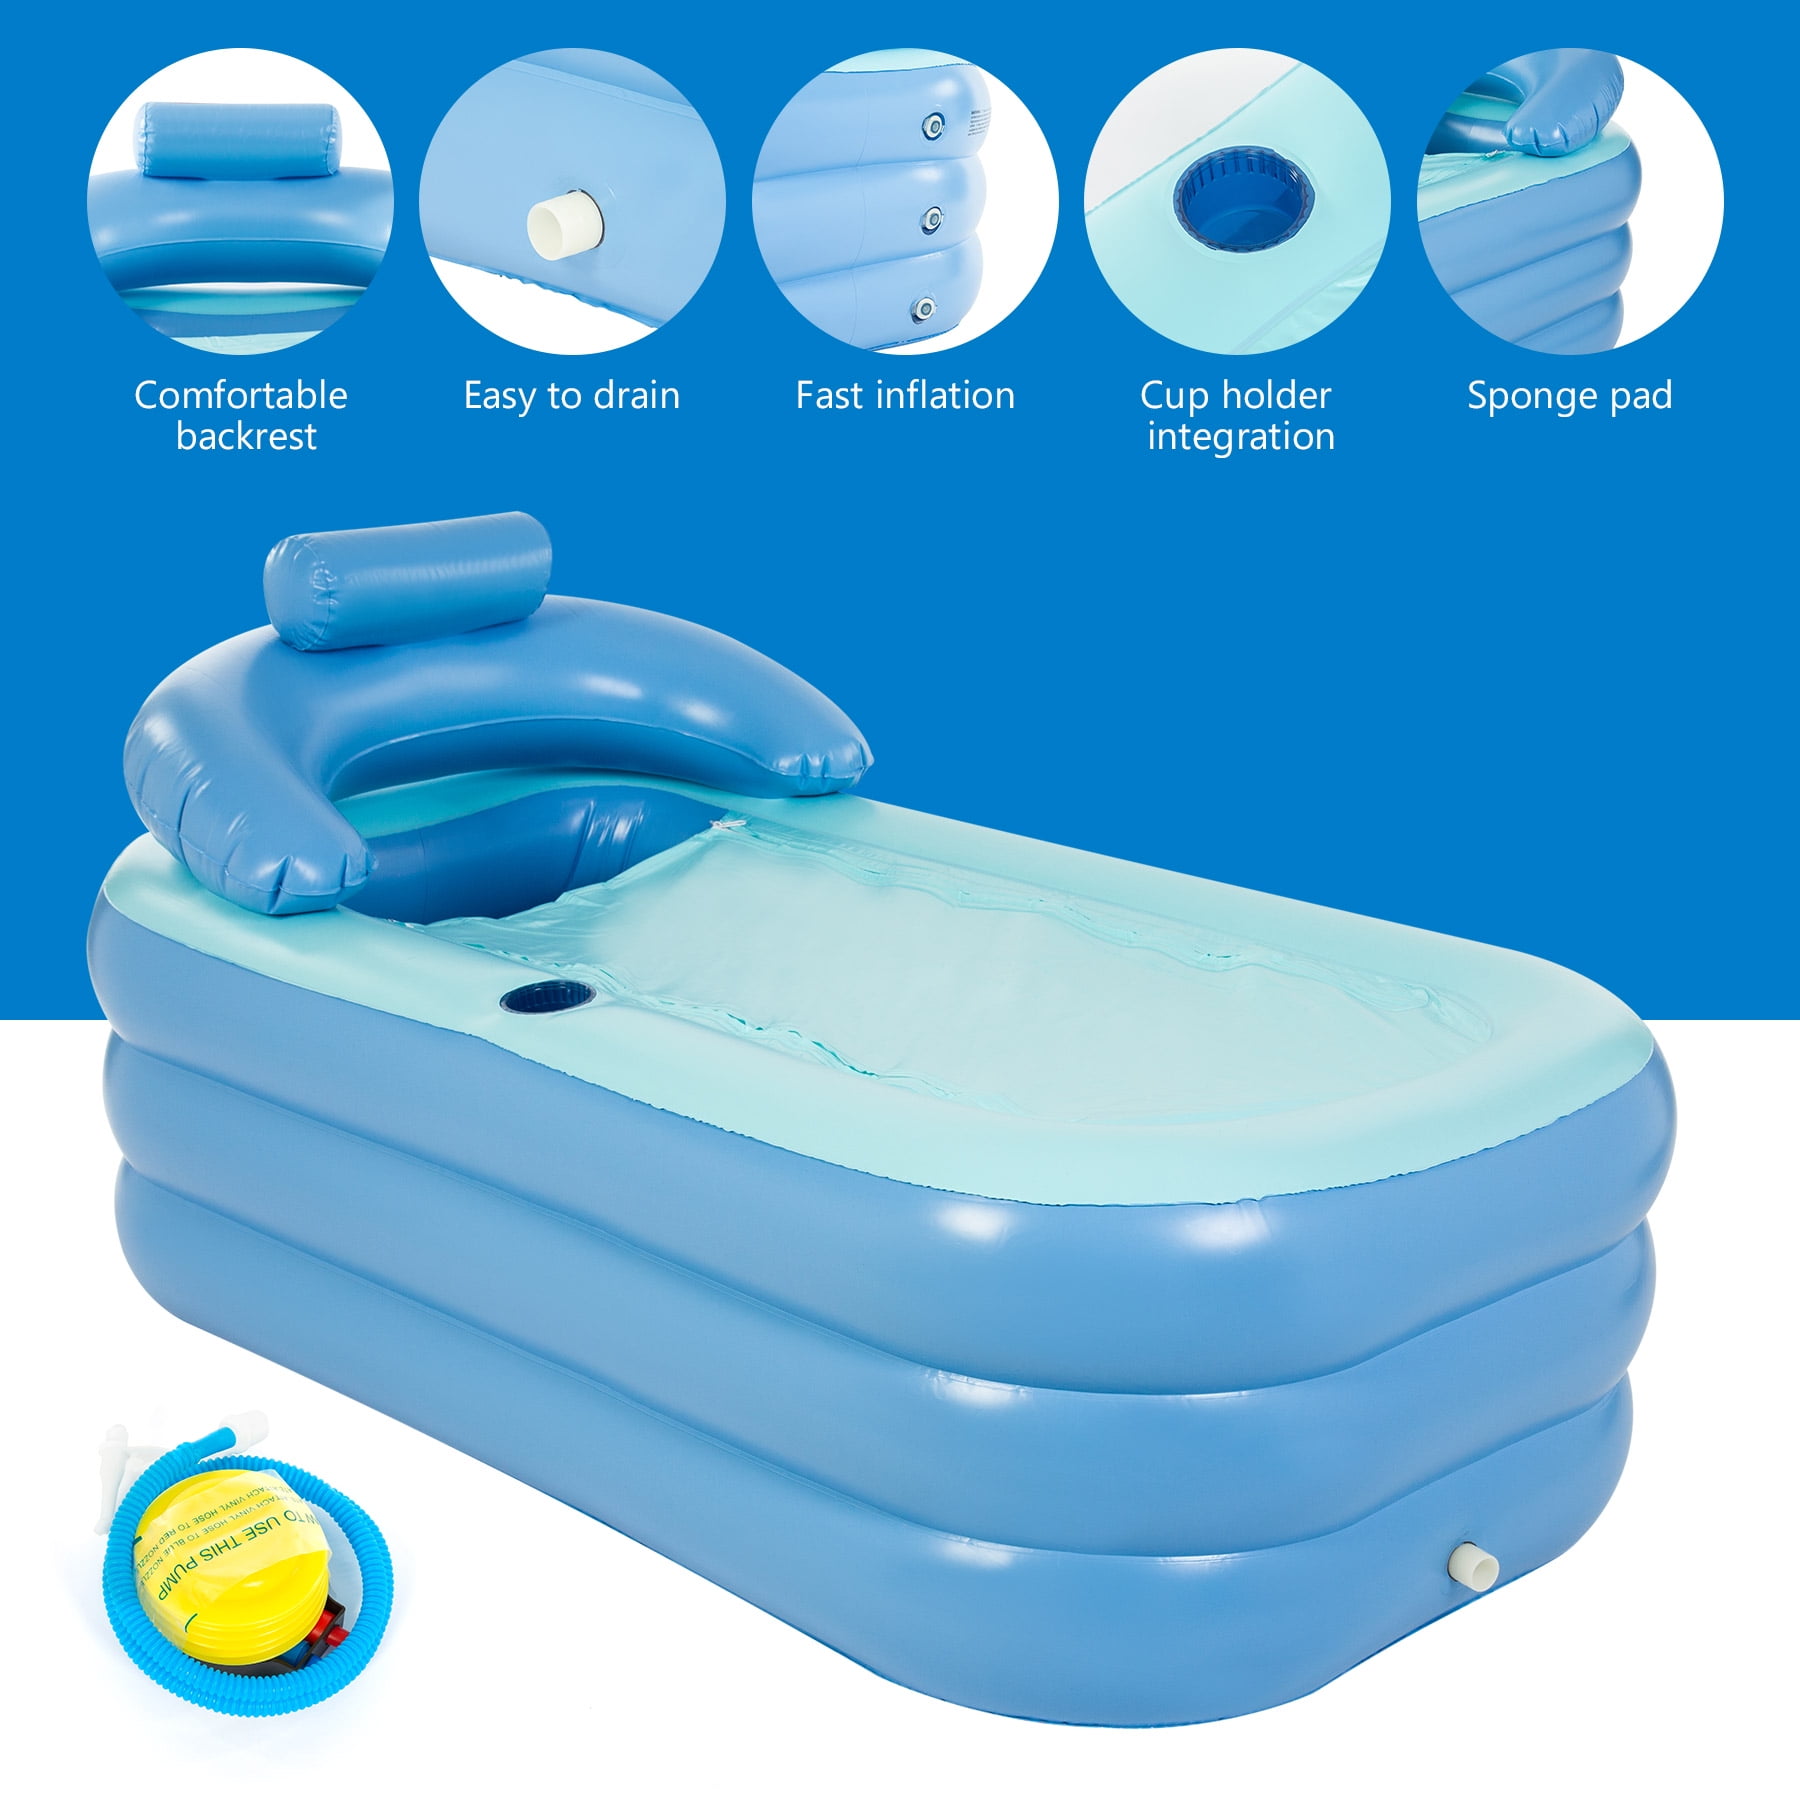 75cm Folding tub Portable PVC Foldable Watertub Warm Spa Massage US HOT 